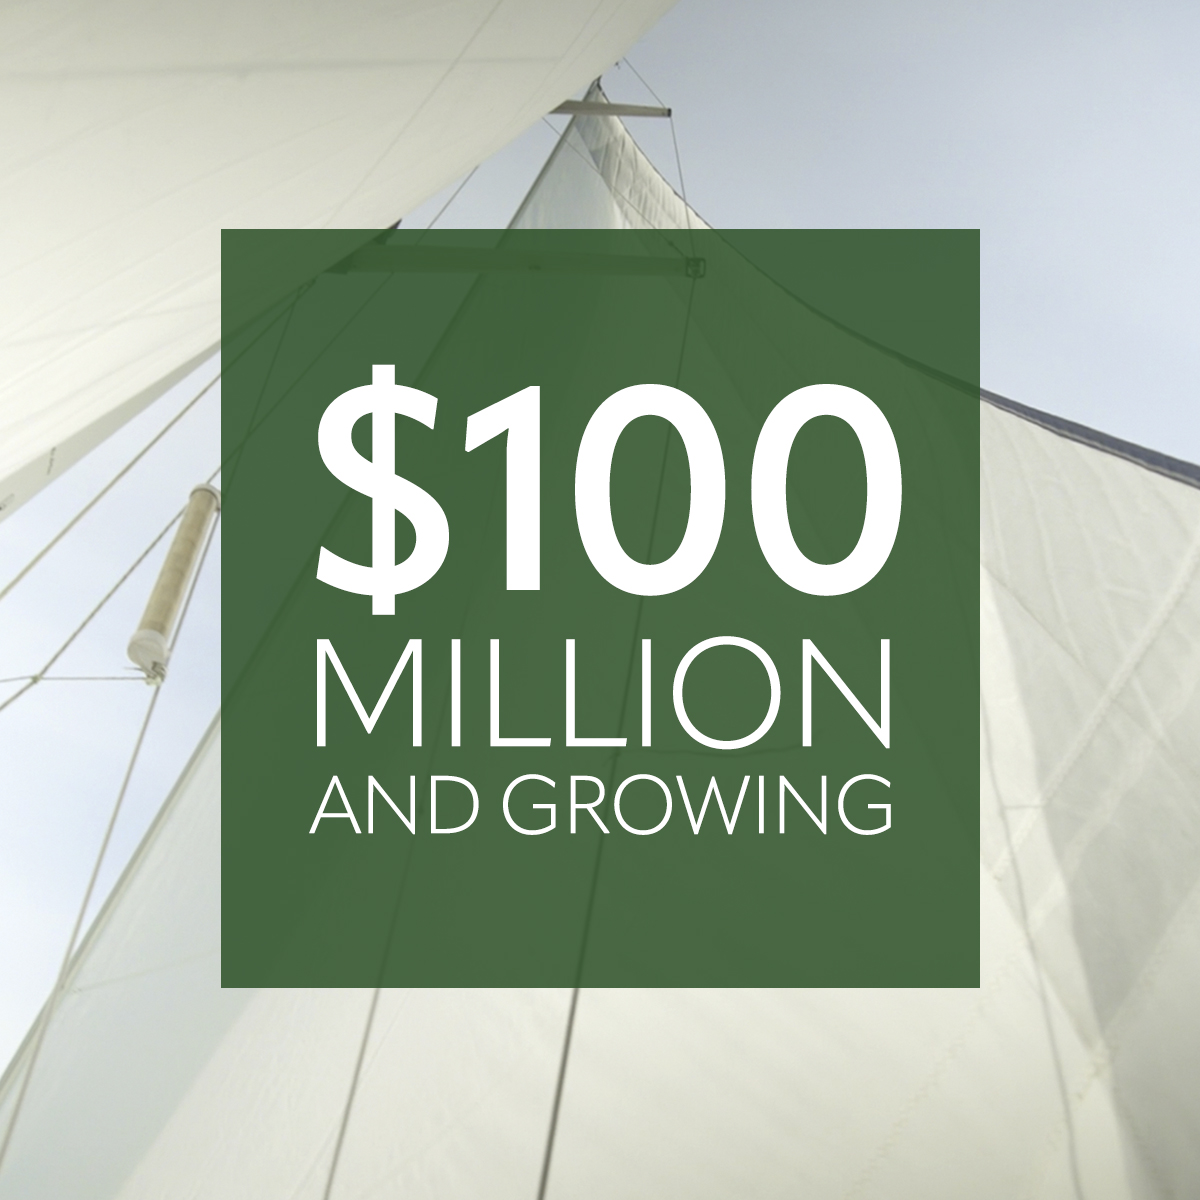 Featured image for “Sebold Capital Management Reach $100 Million Assets Under Management”